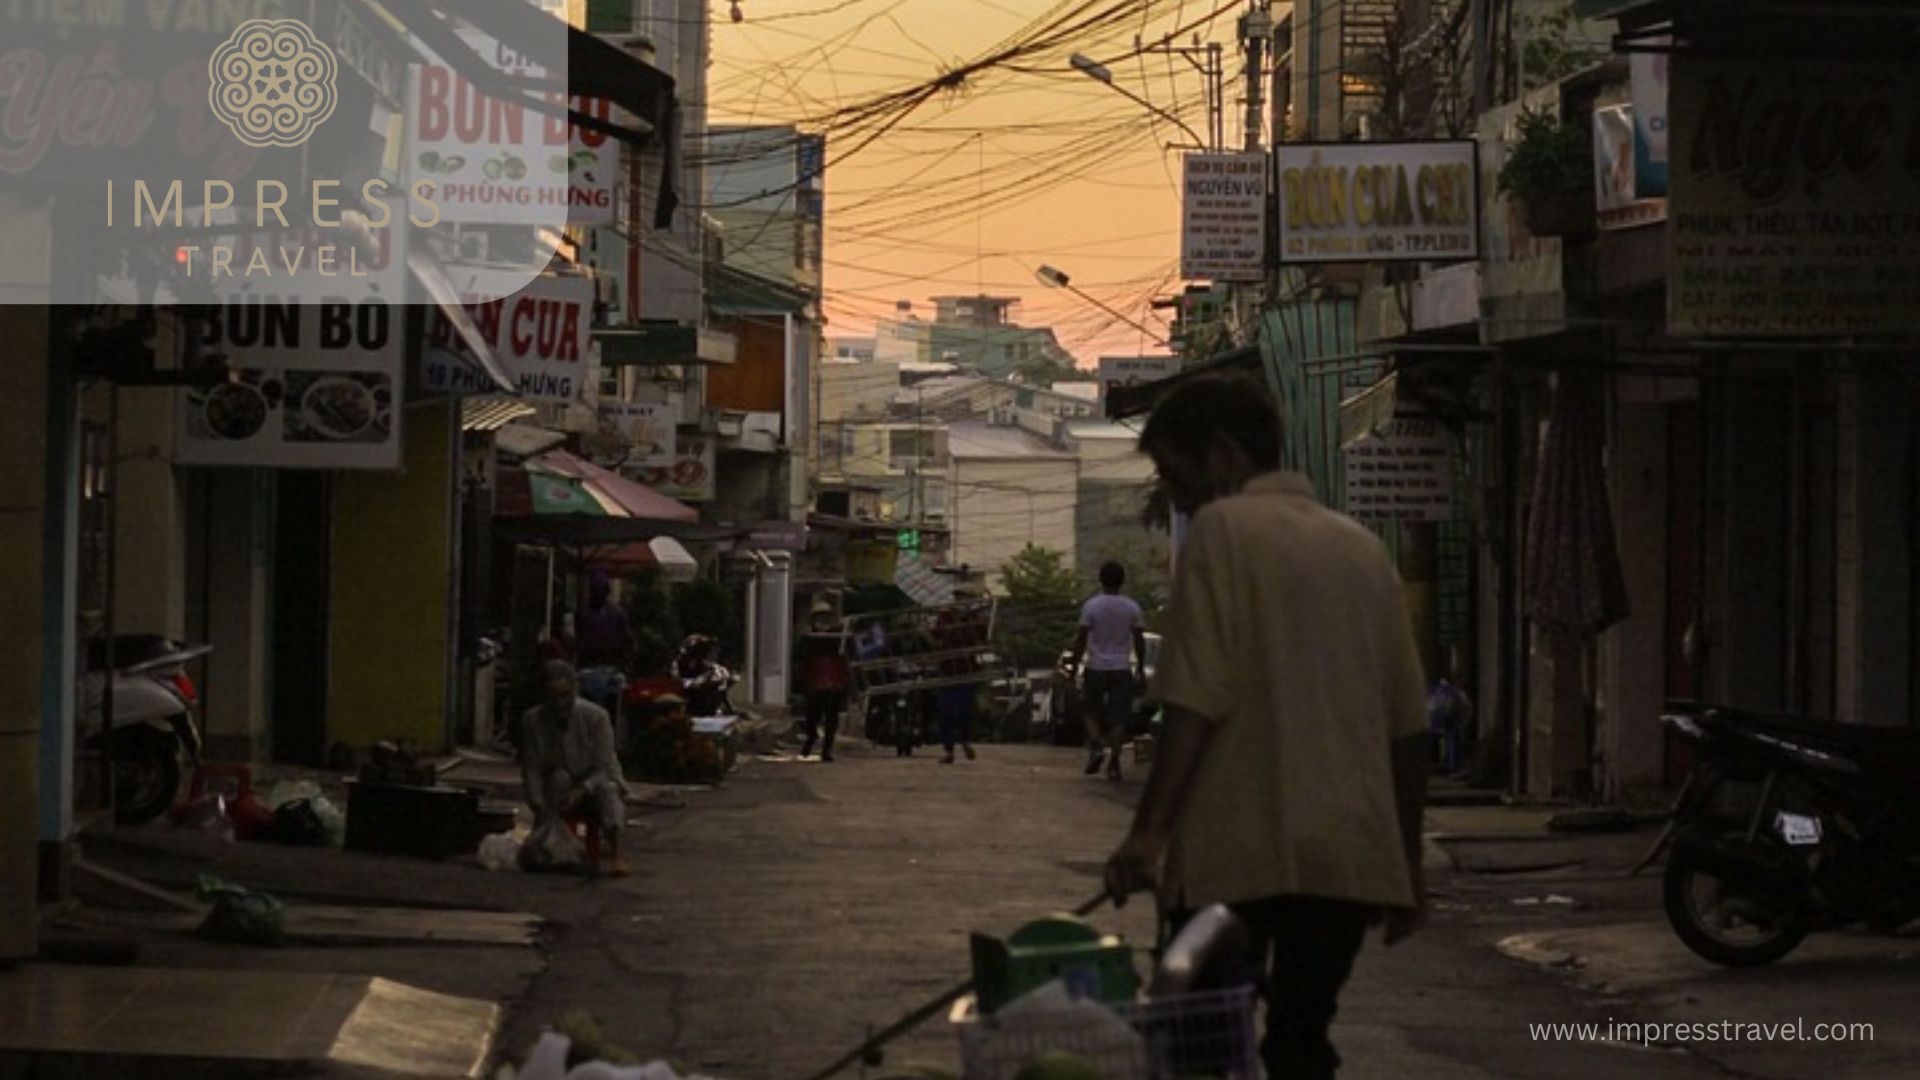 People in slums of Hanoi